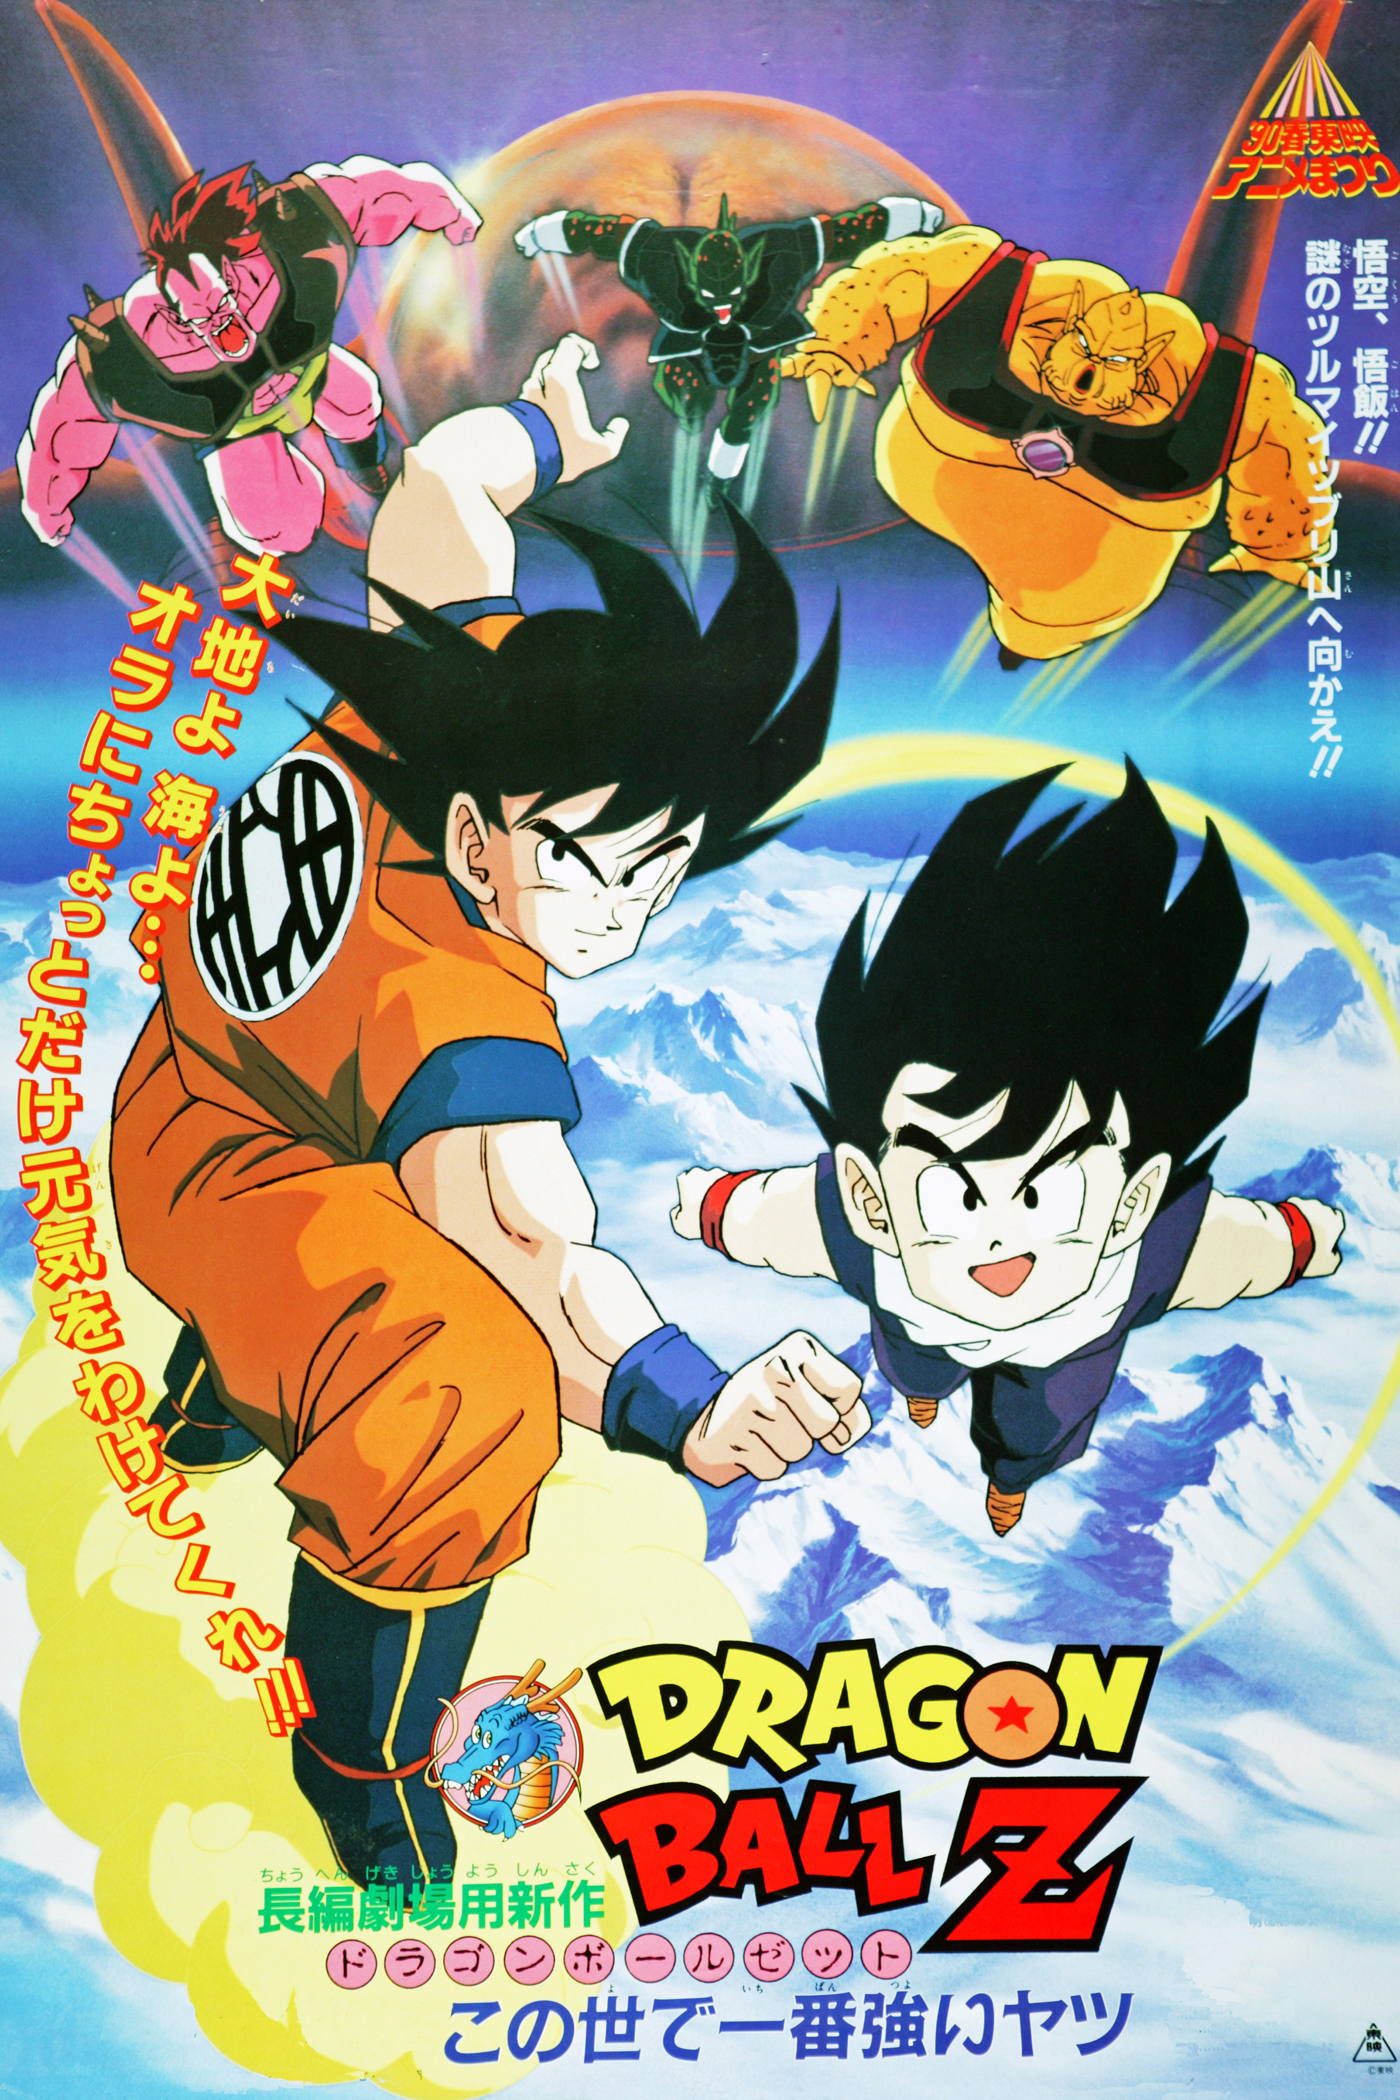 Dragon Ball Z movie 2 | Japanese Anime Wiki | FANDOM ...